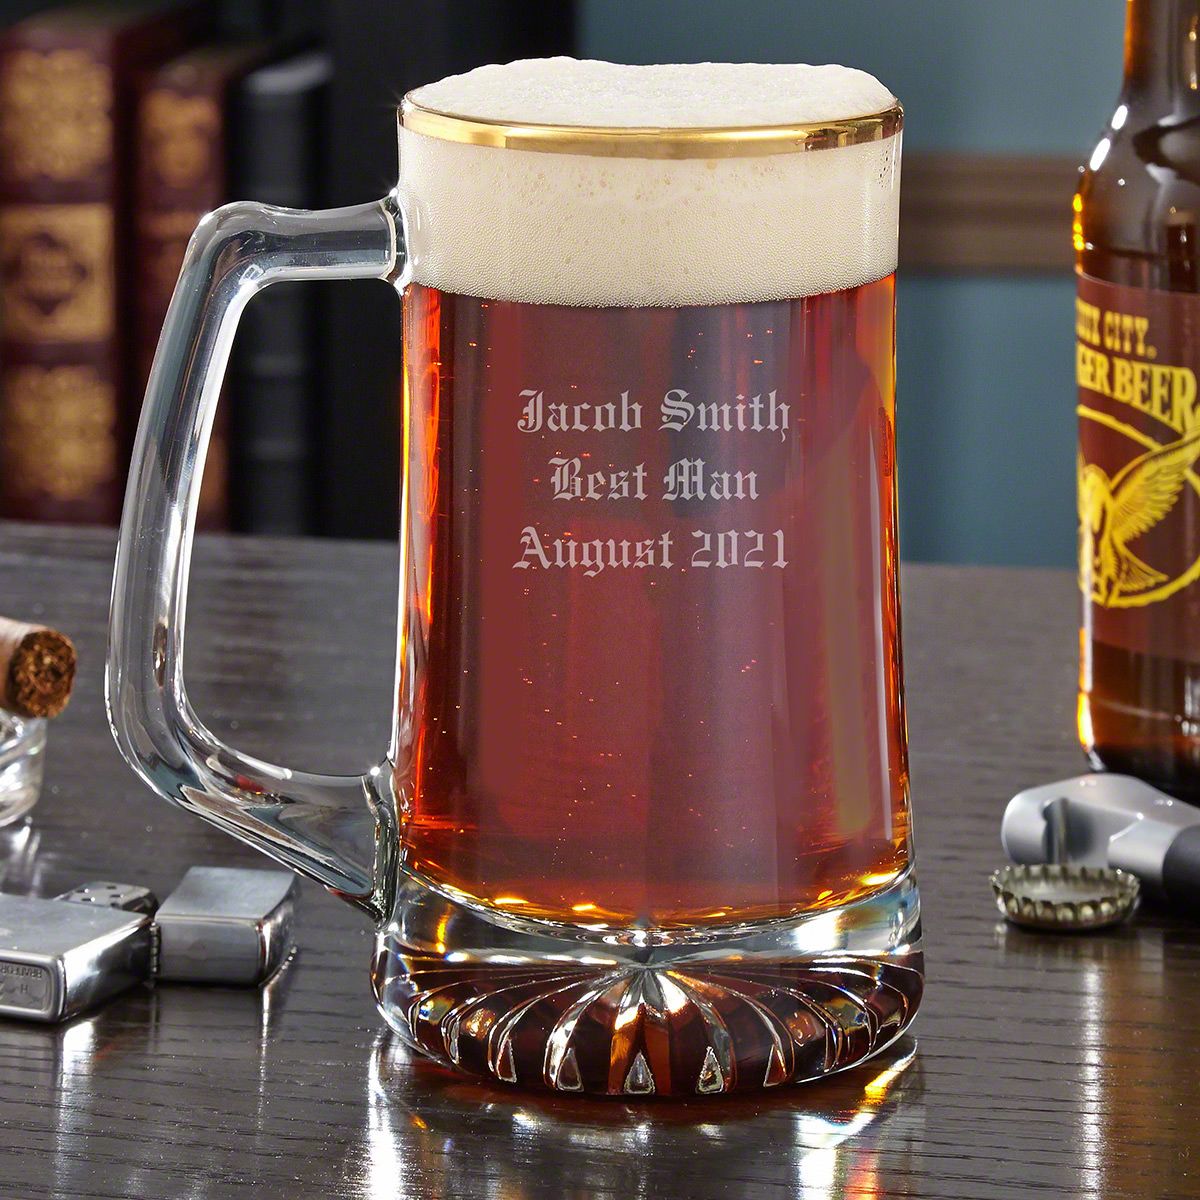 https://images.homewetbar.com/media/catalog/product/1/8/1886-gold-rimmed-personalized-beer-mug-up-5-7.jpg?store=default&image-type=image